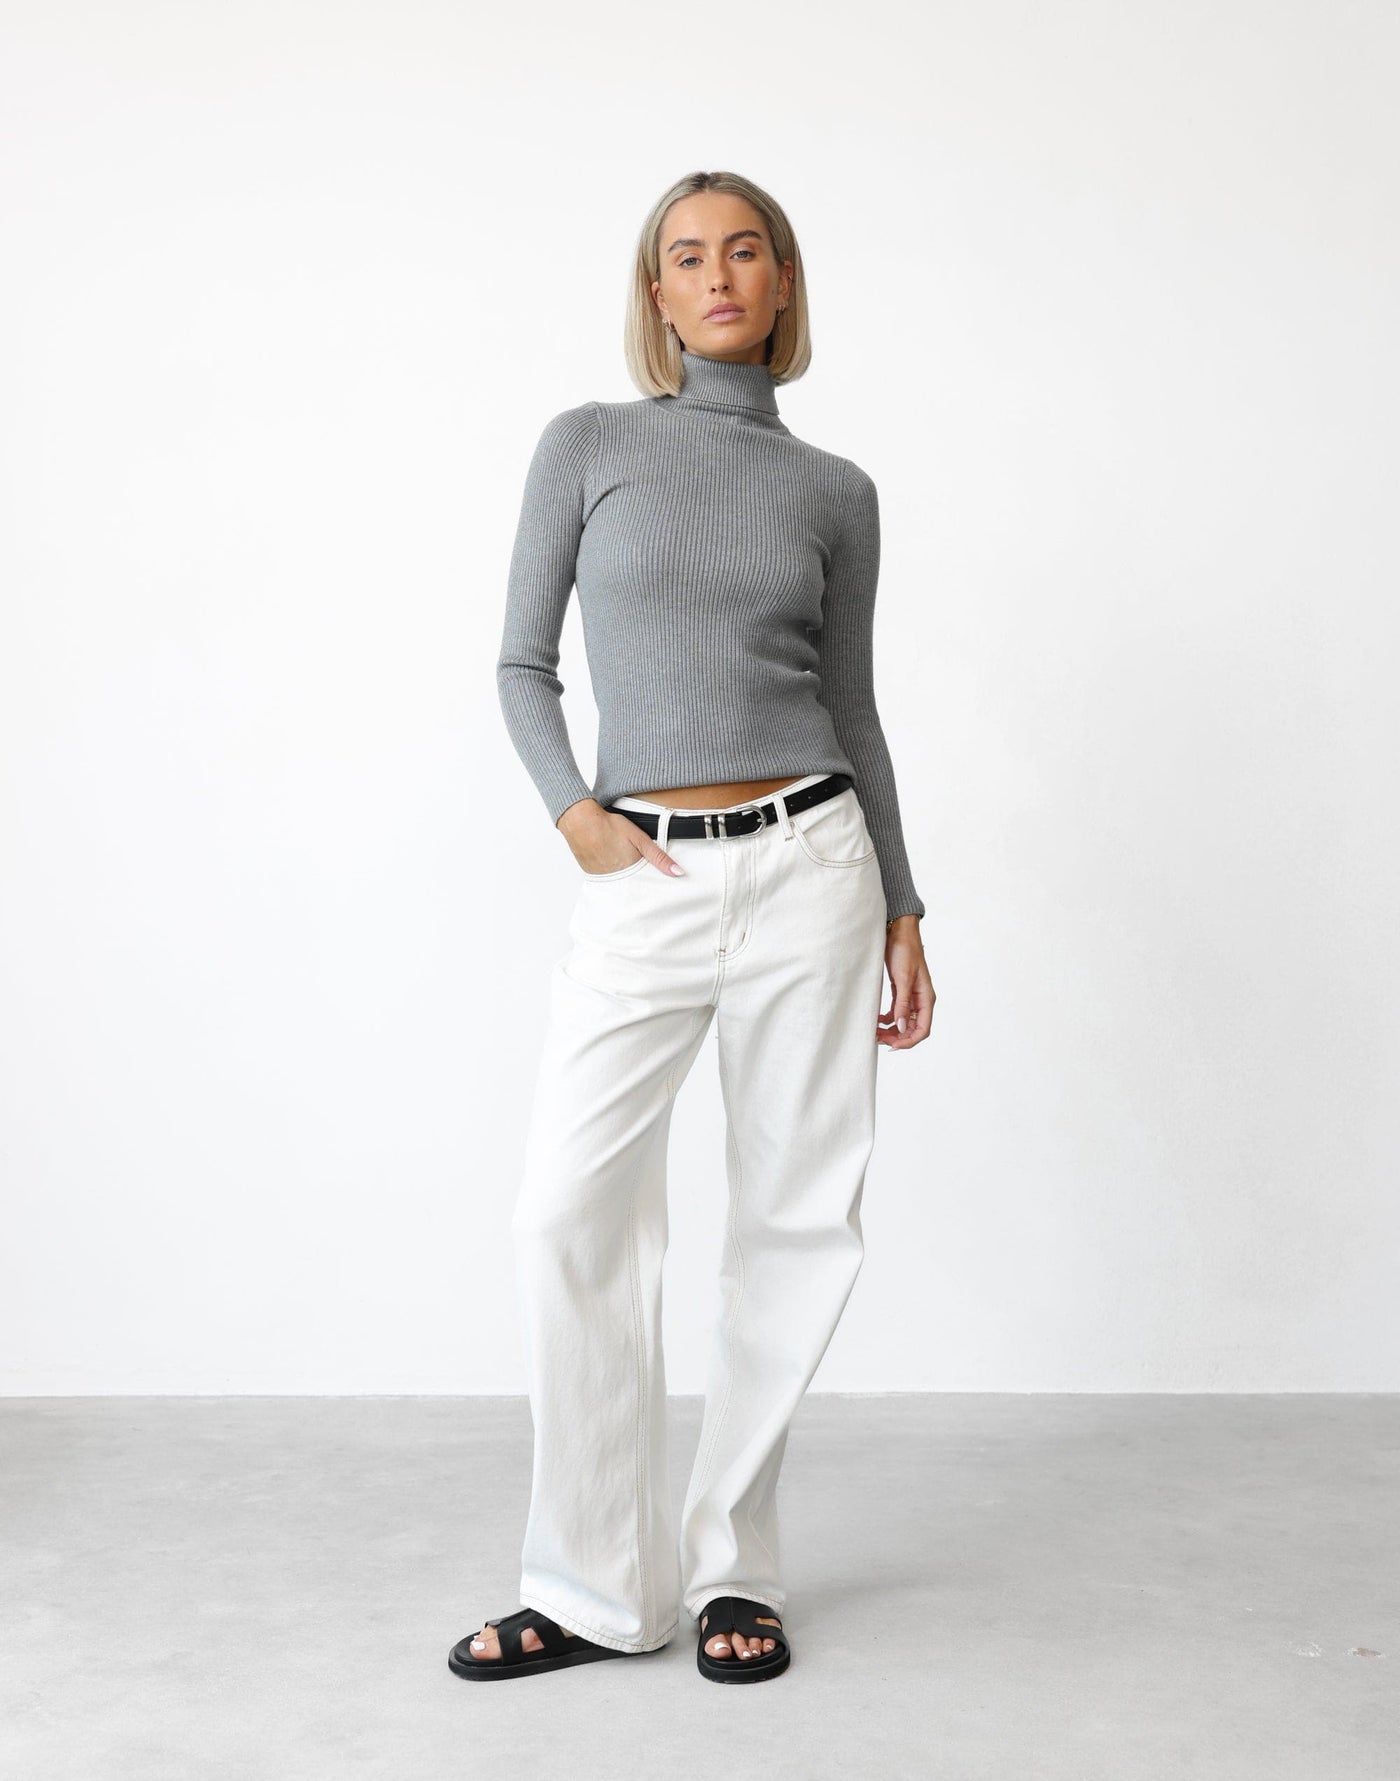 Davison Long Sleeve Top (Grey) - Turtleneck Long Sleeve Knit Top - Women's Top - Charcoal Clothing